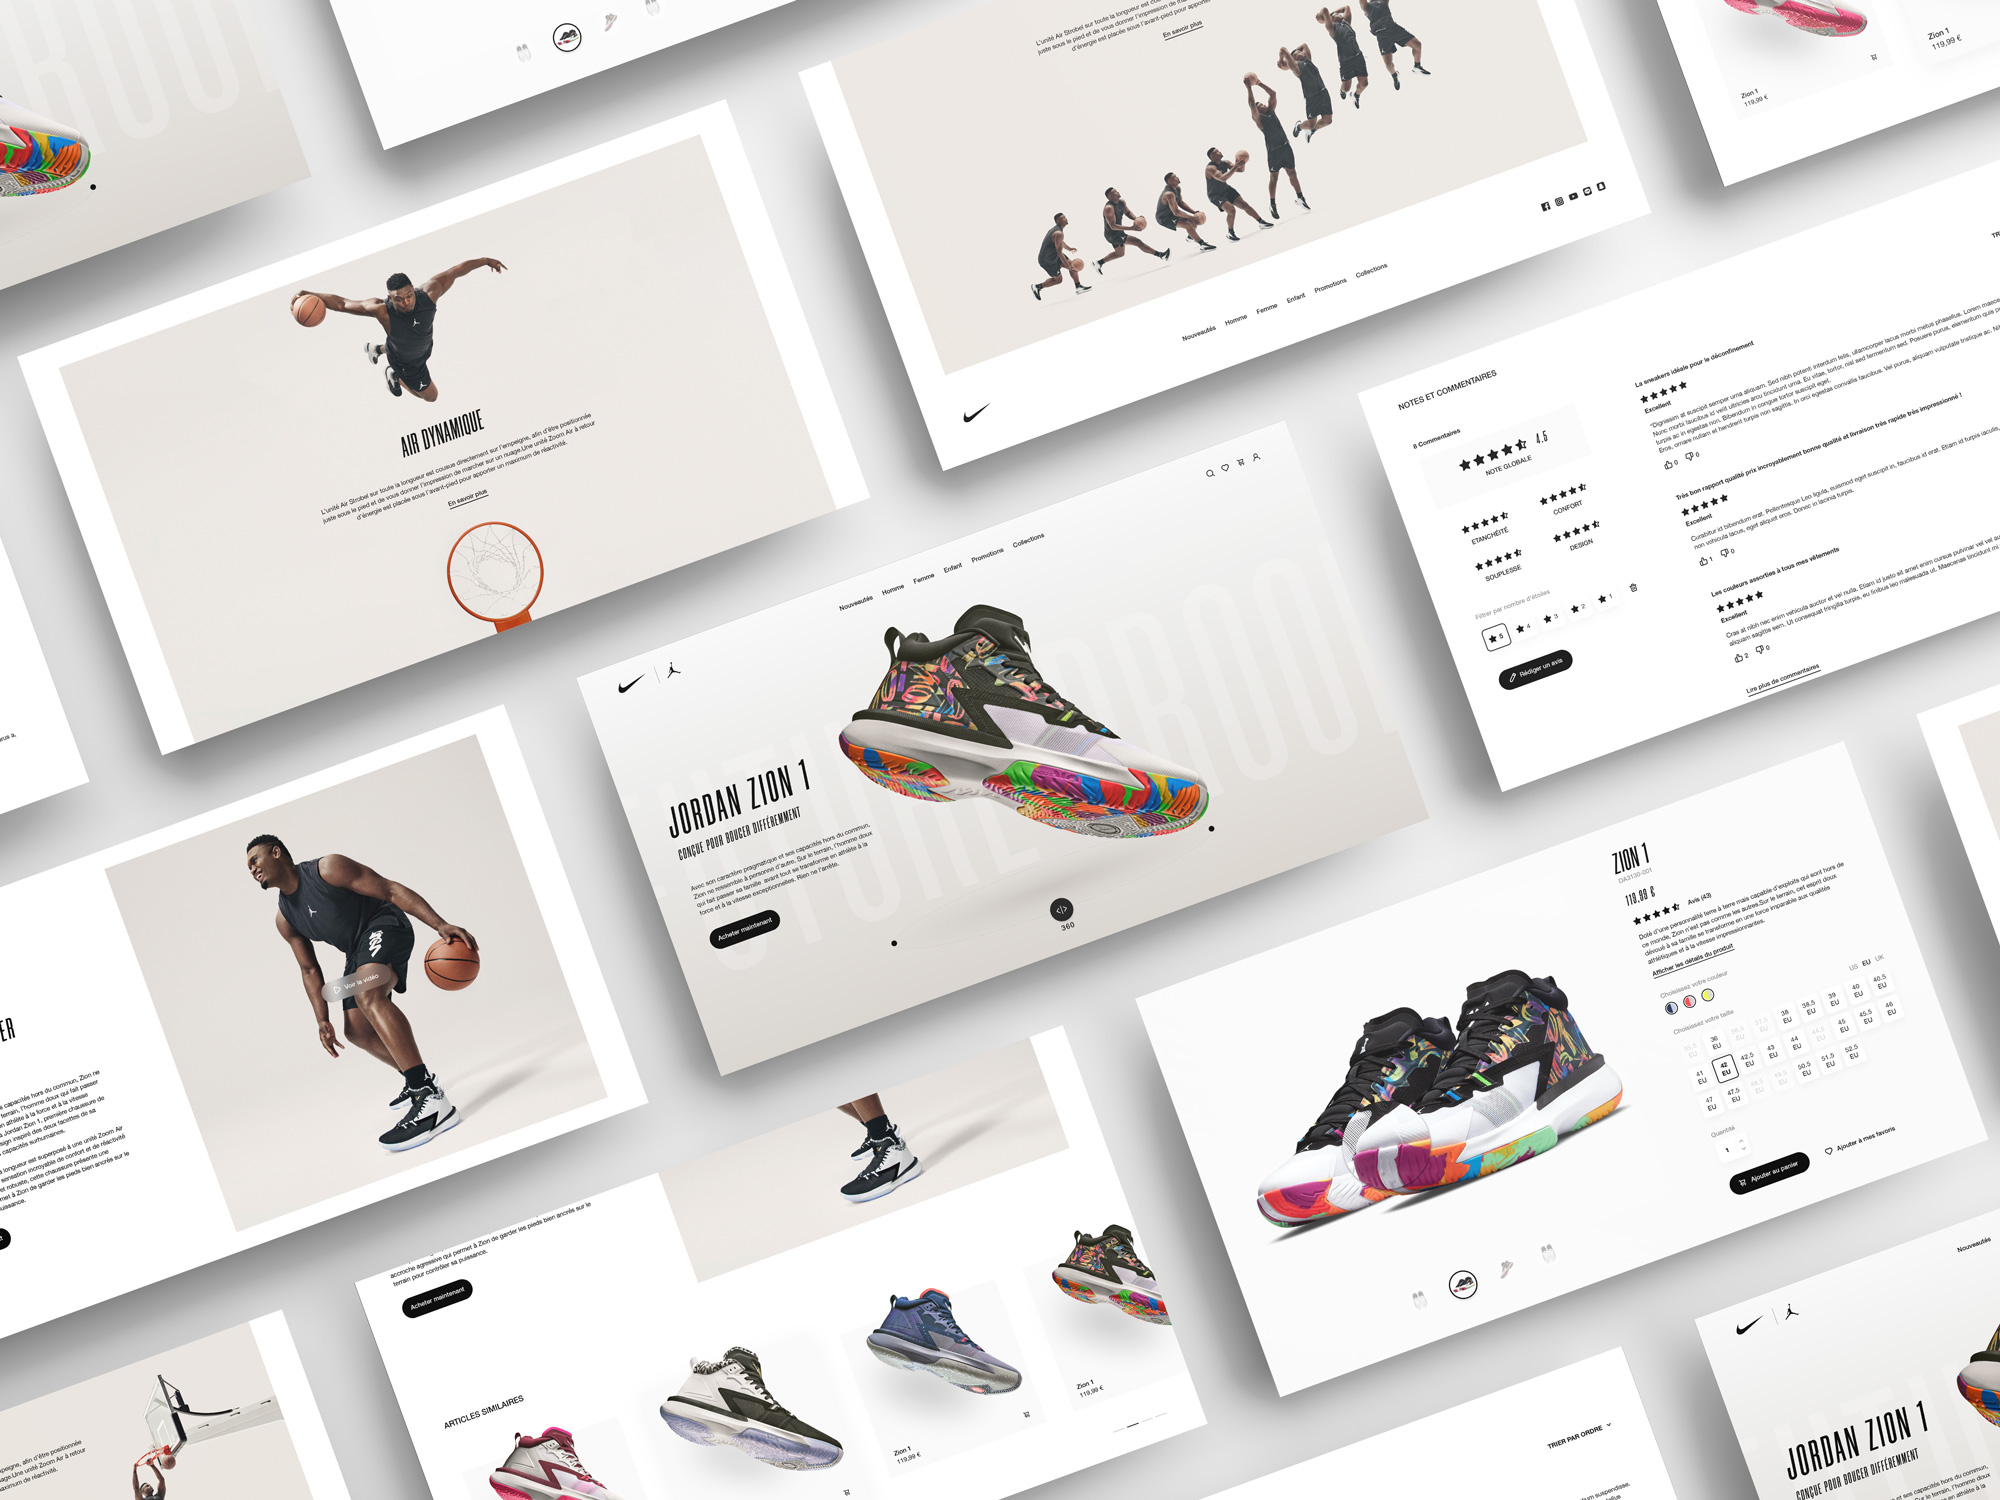 Nike Jordan Zion